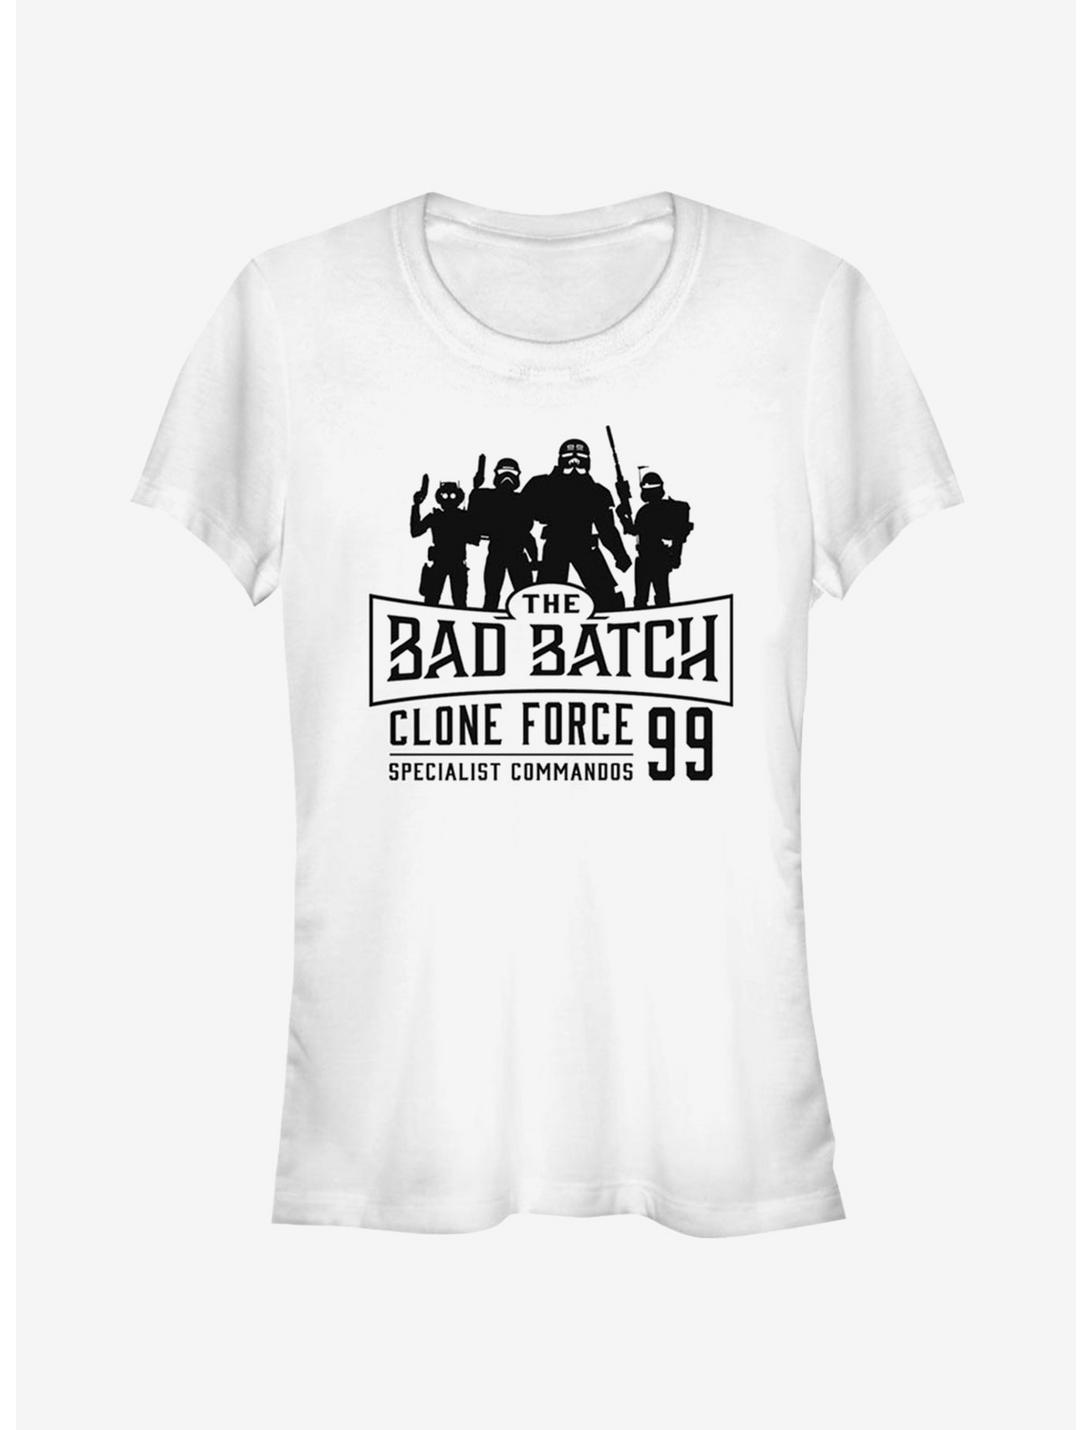 Star Wars The Clone Wars Bad Batch Emblem Girls T-Shirt, WHITE, hi-res